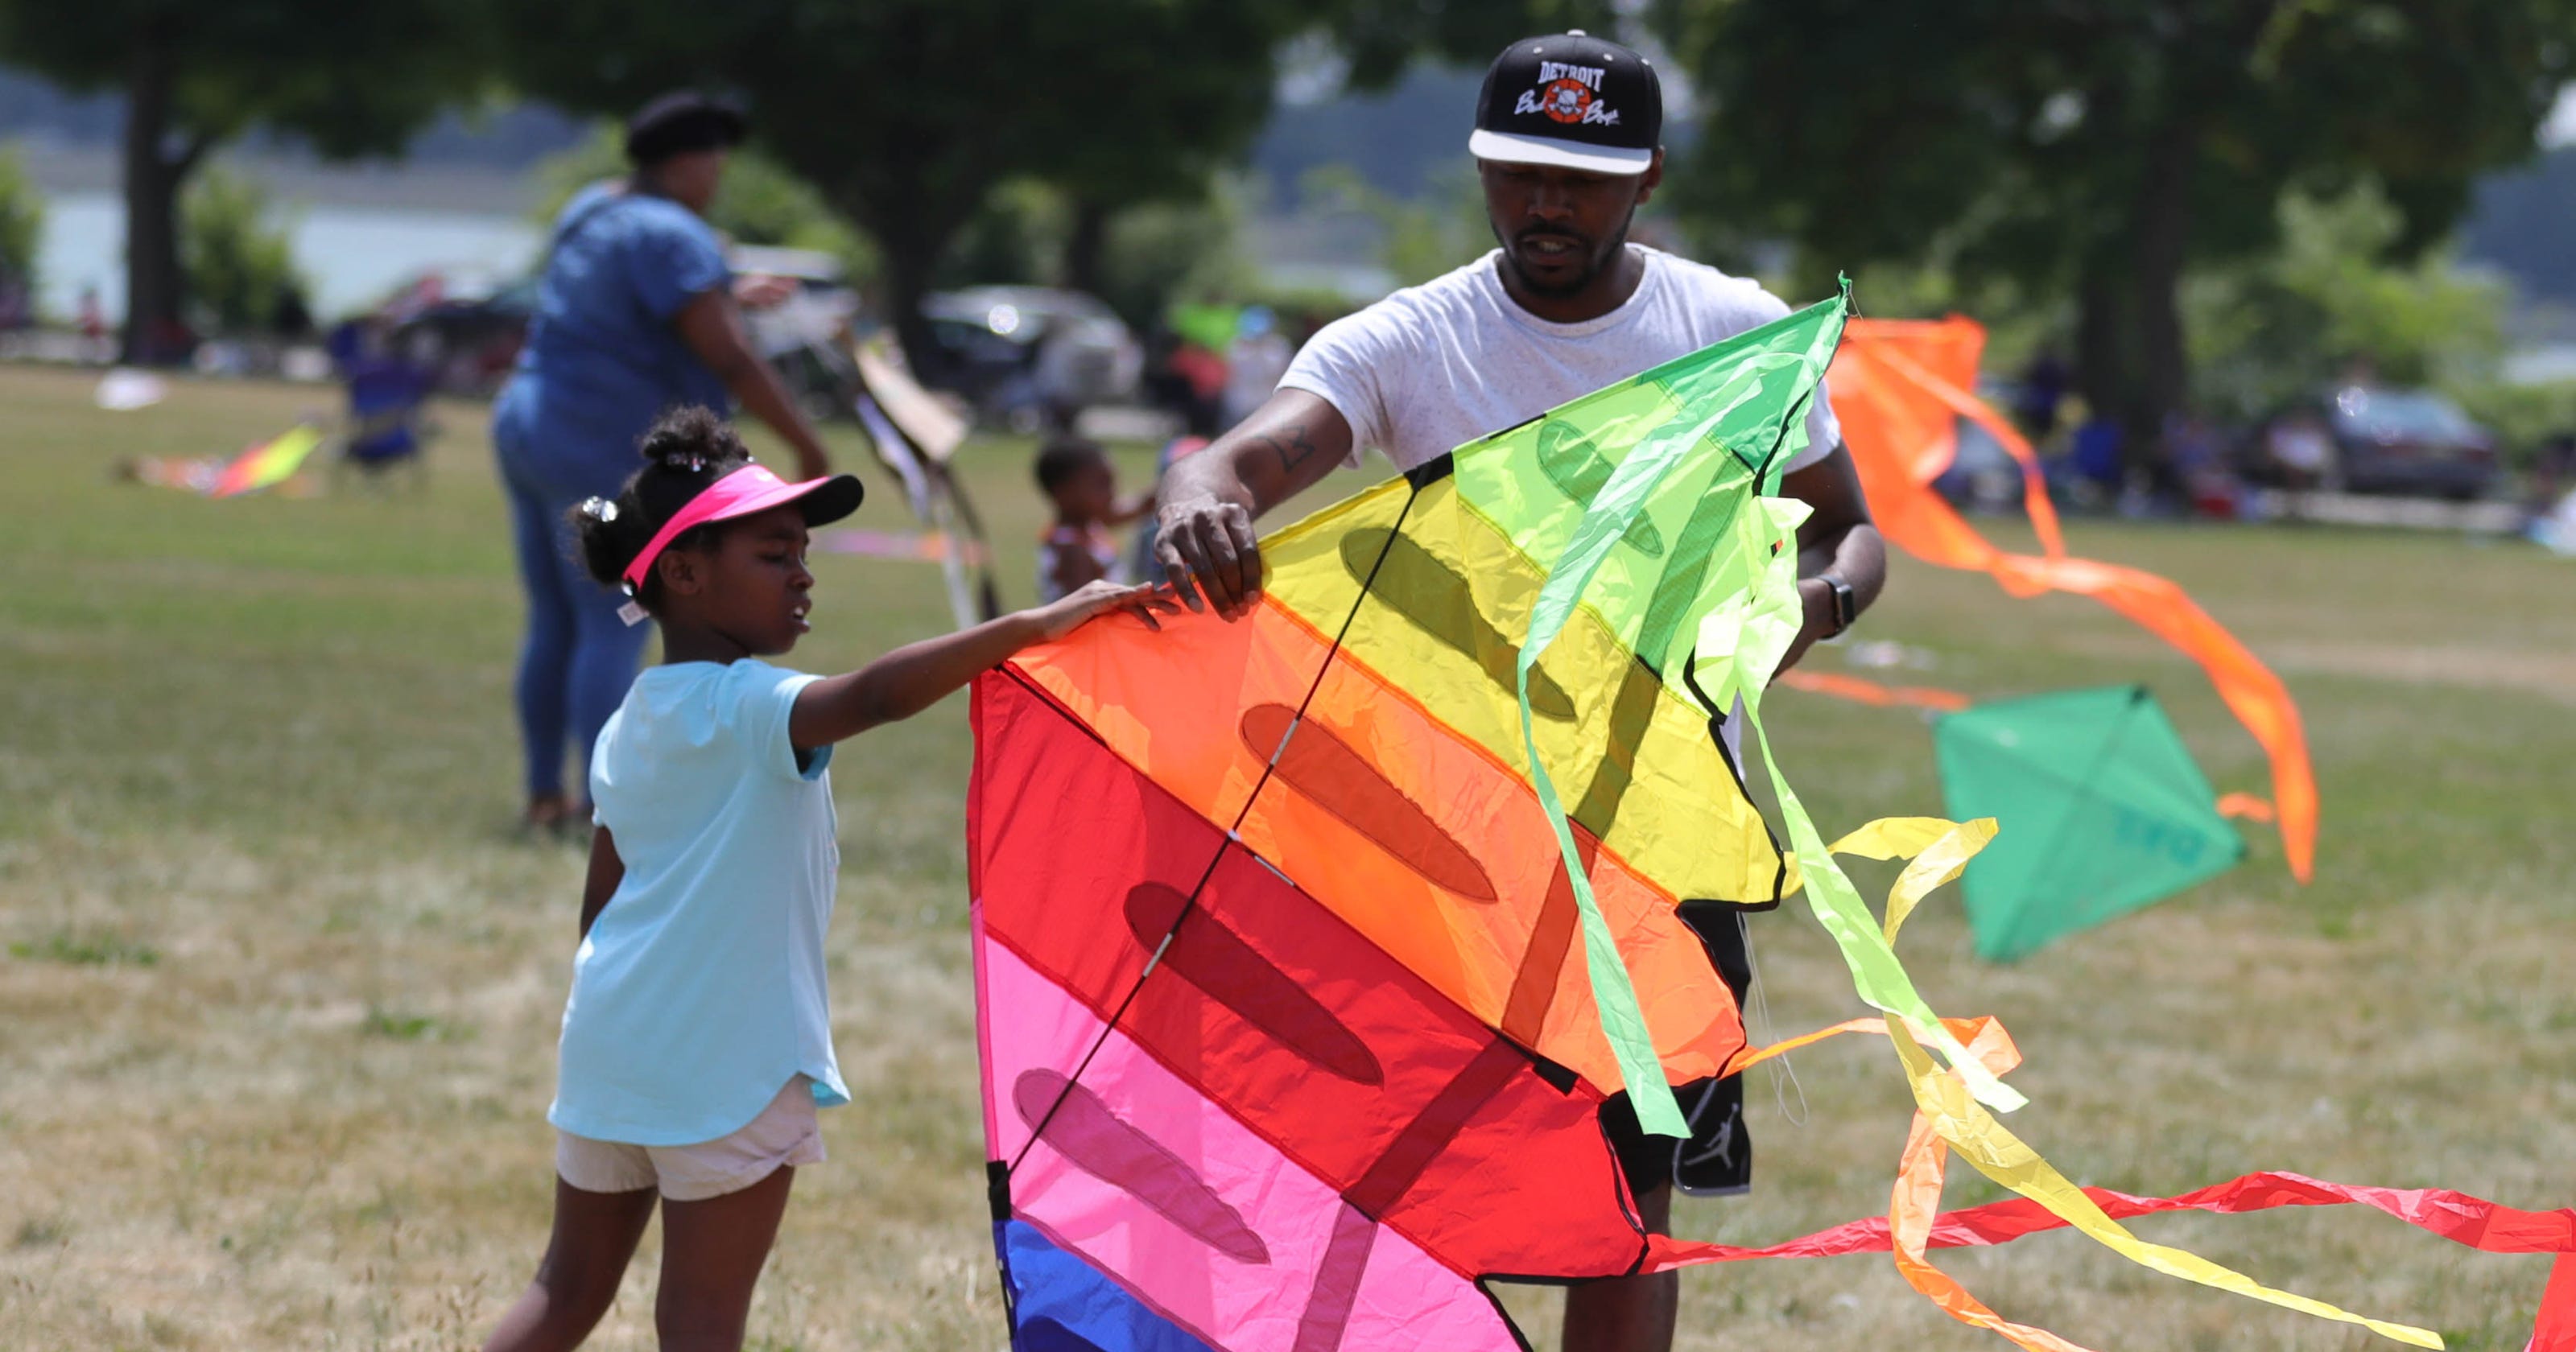 Detroit Kite Festival brings free fun to Belle Isle on Sunday